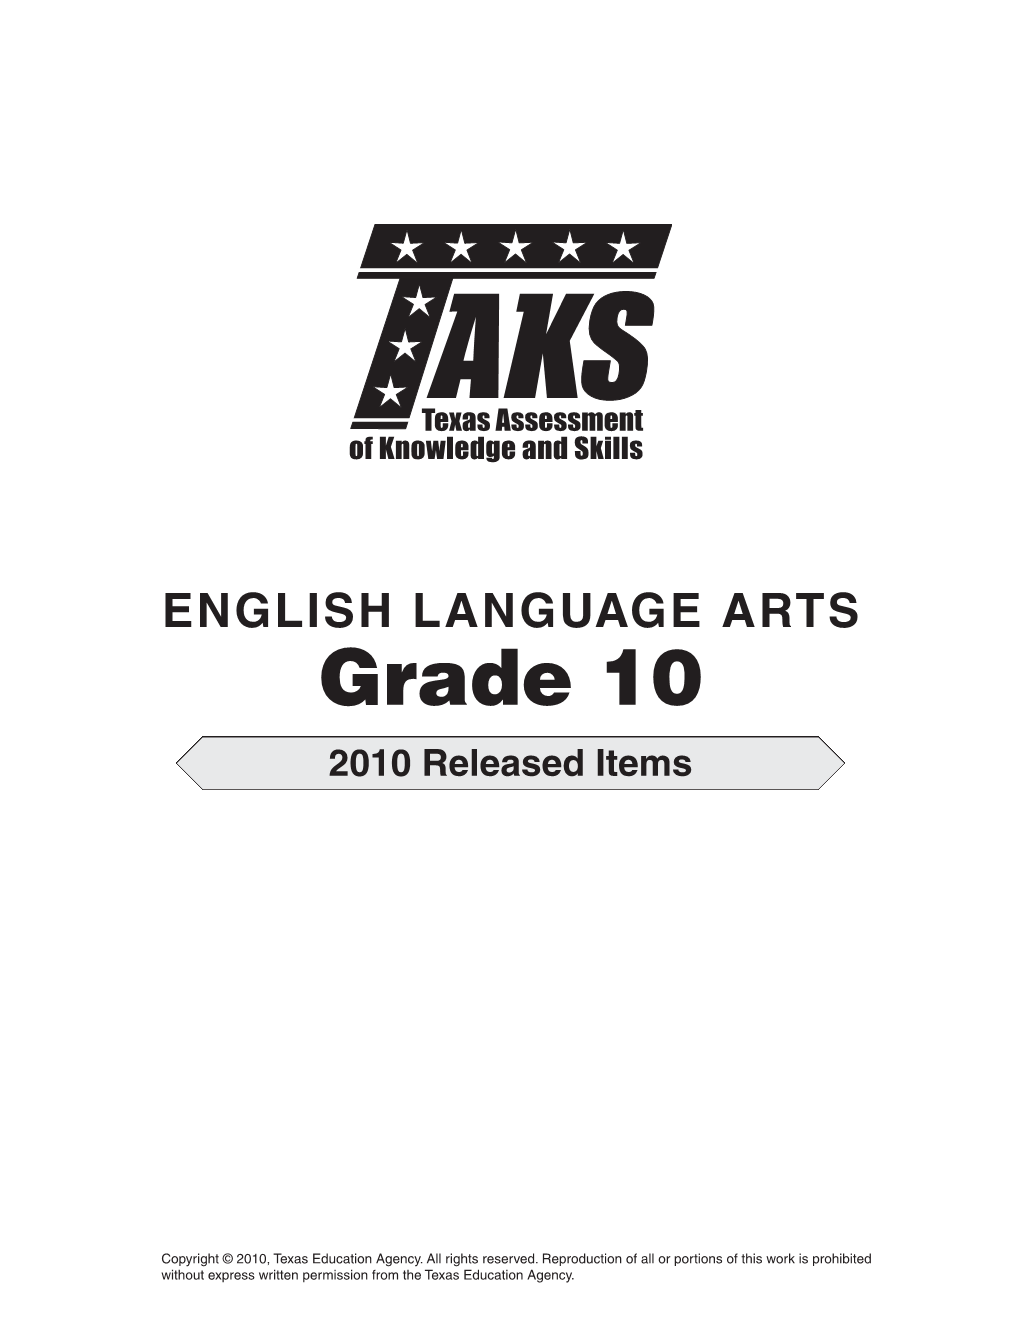 Grade 10 2010 Released Items